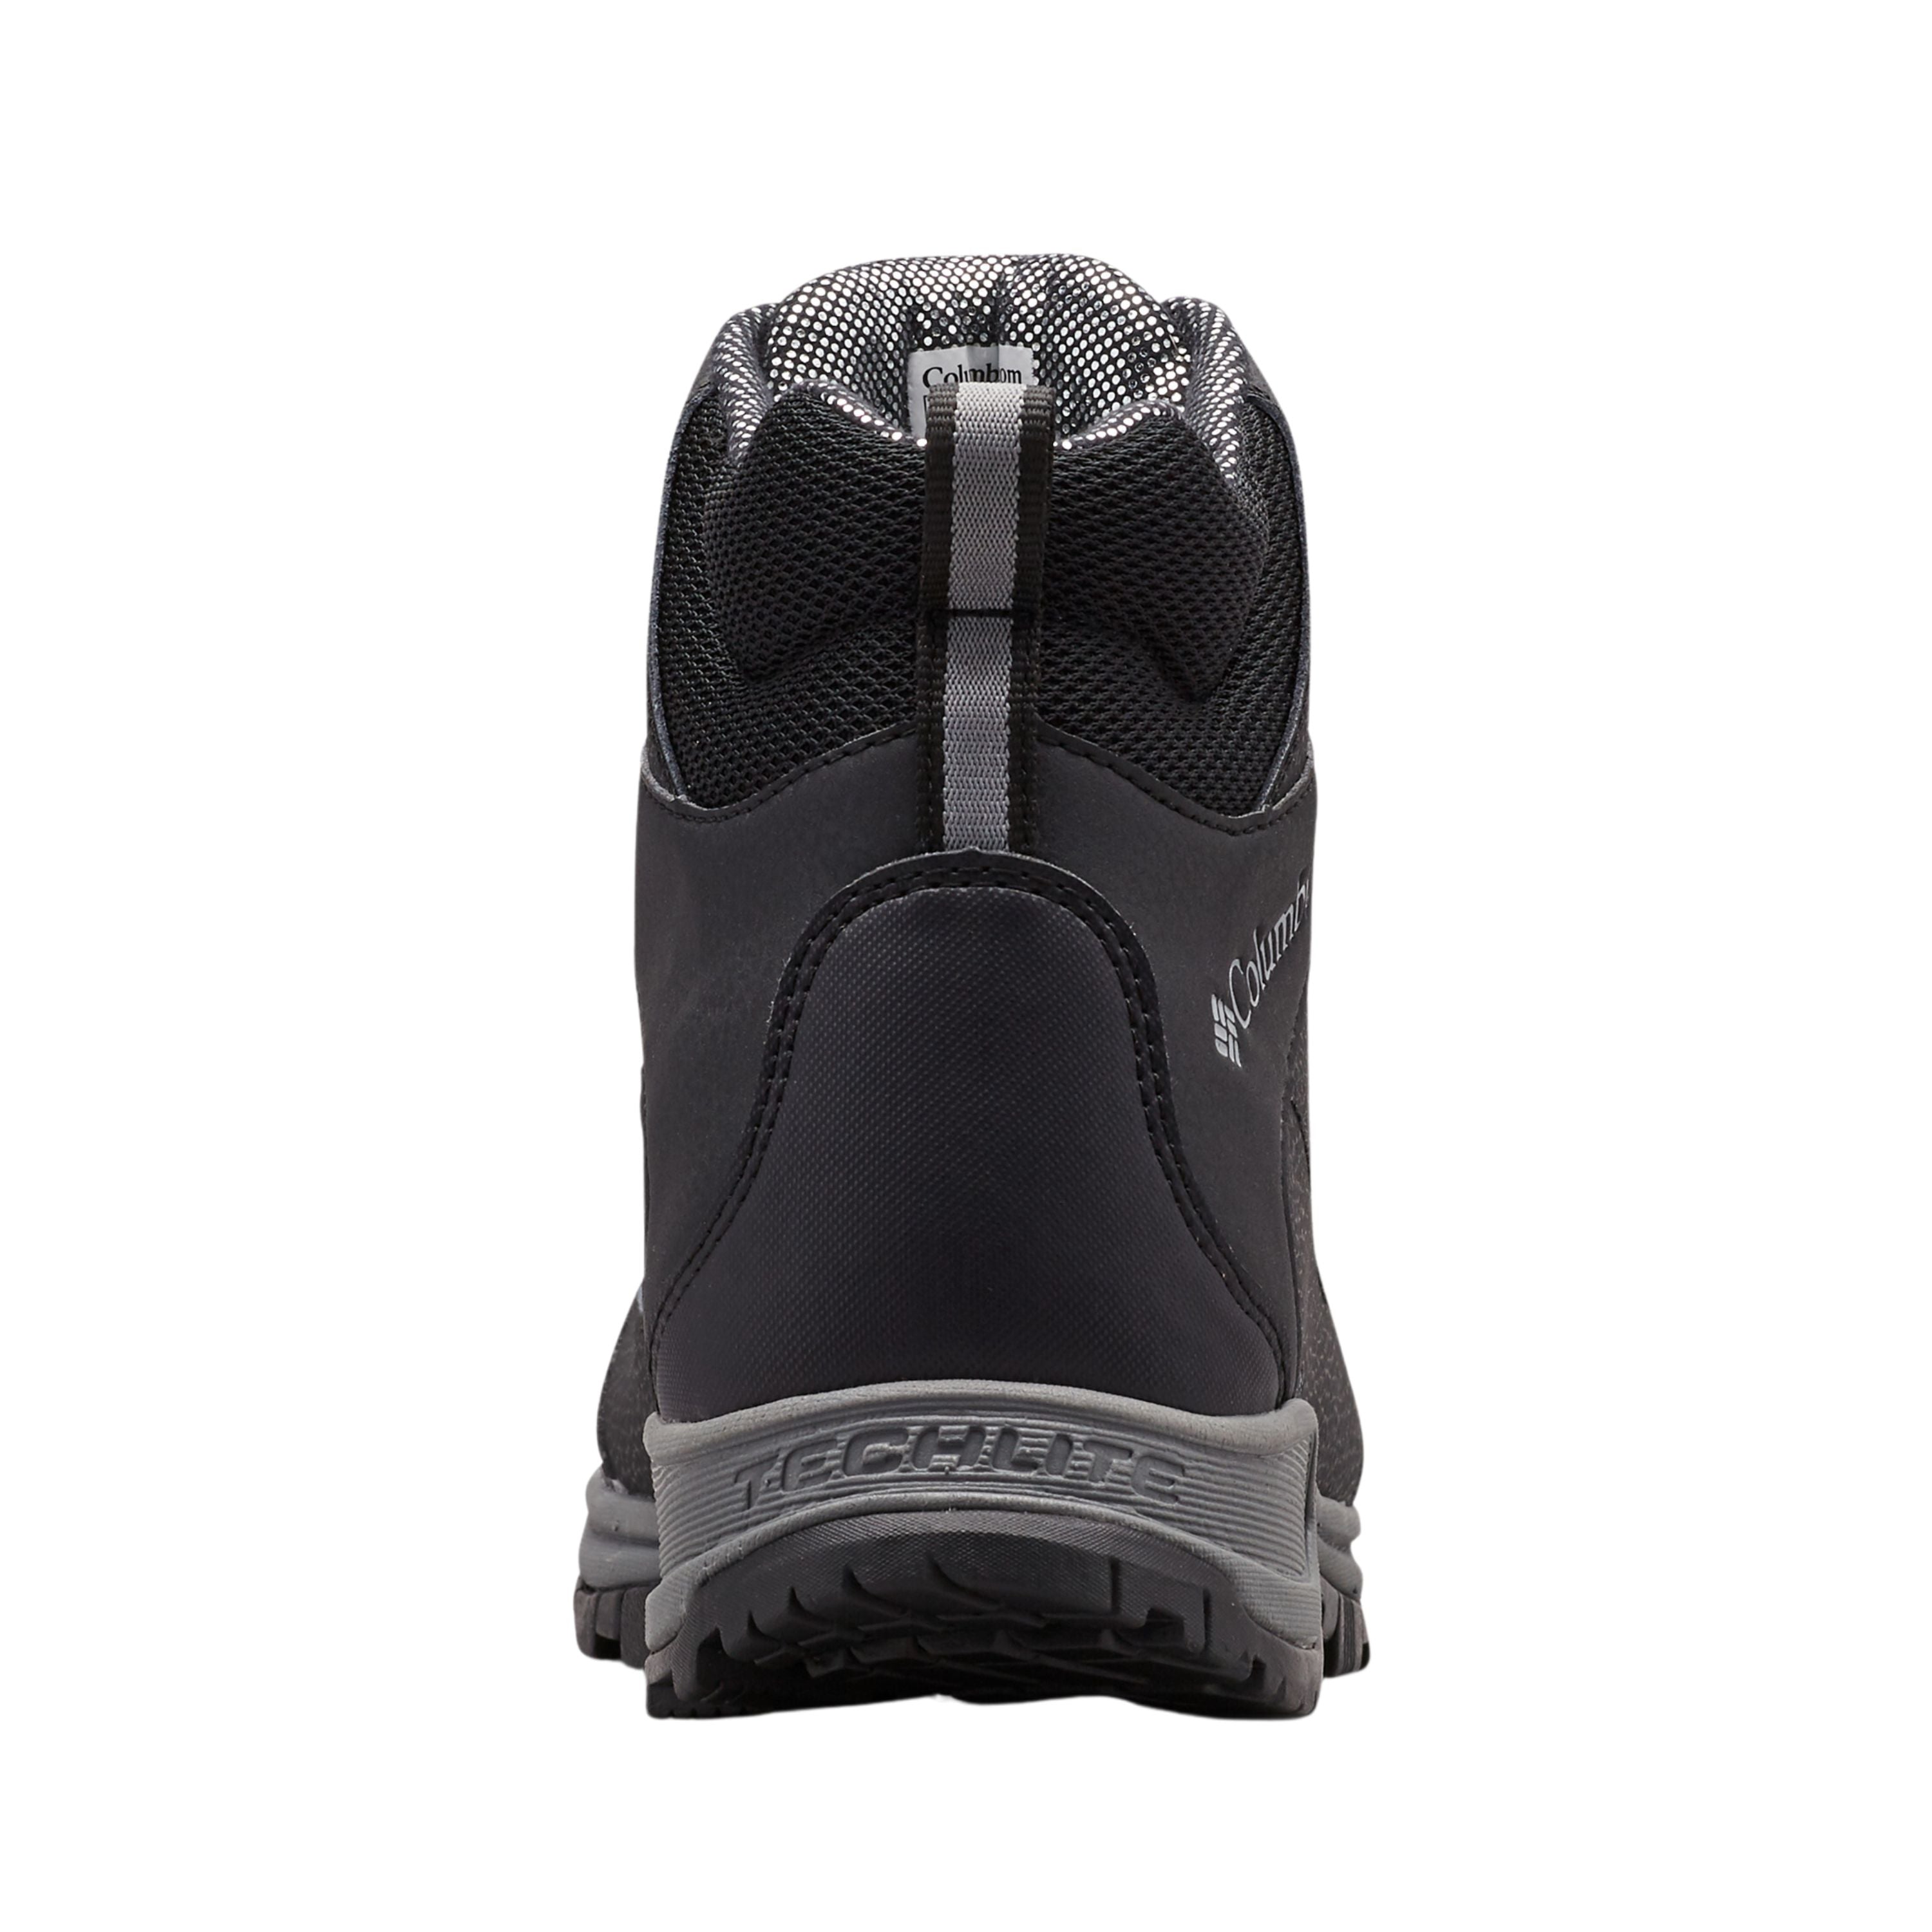 "Liftop™ III" Insulated boots - Men’s